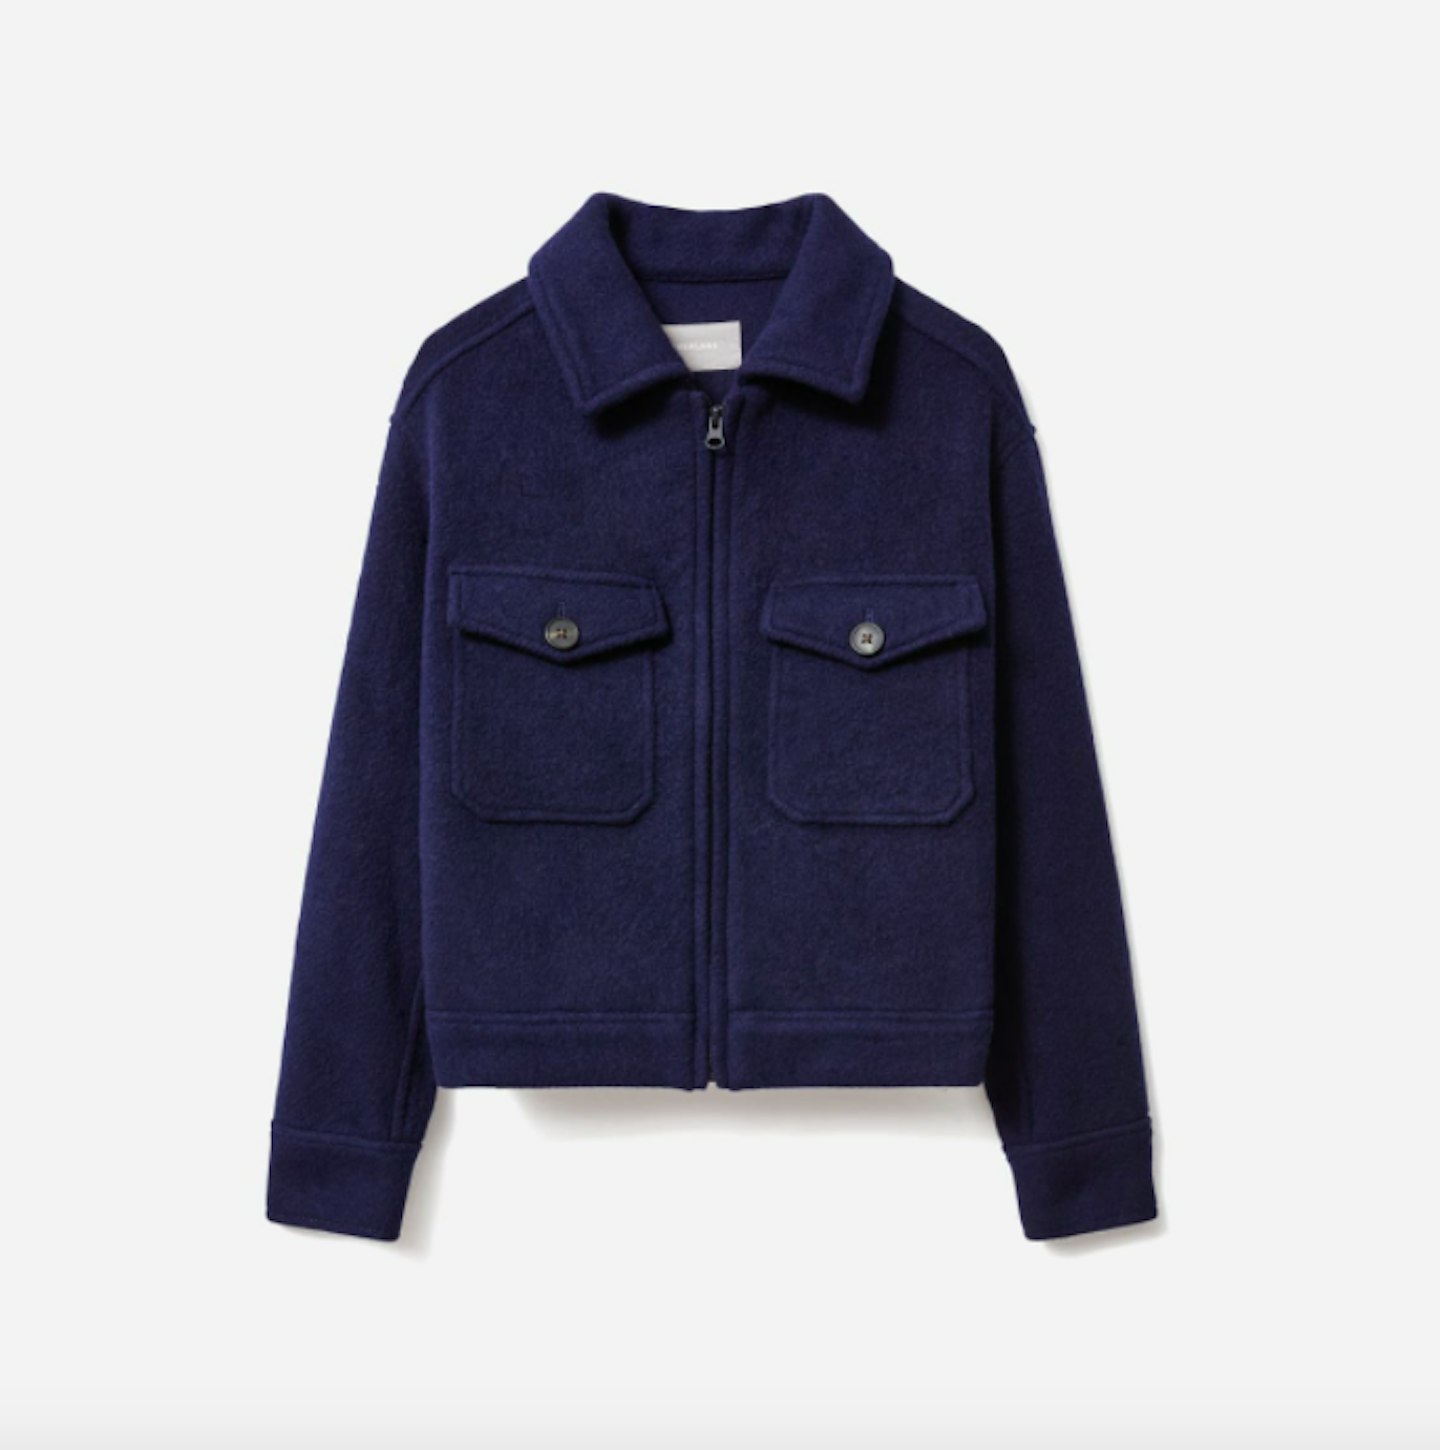 The Wool Mackinaw Jacket, £174